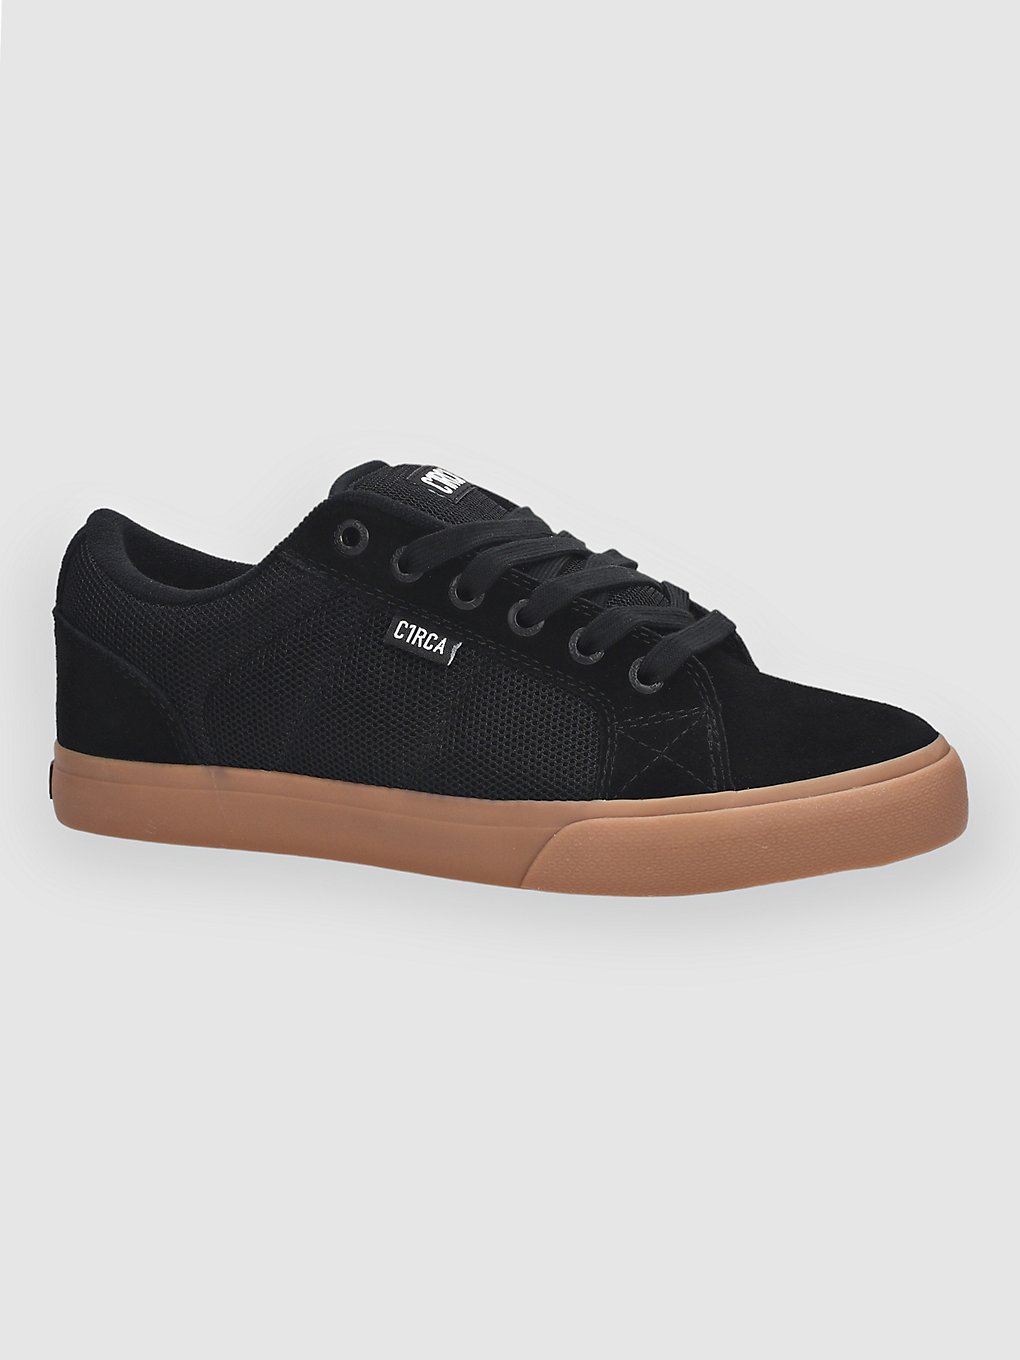 C1rca Cero Skate Shoes black gum kaufen